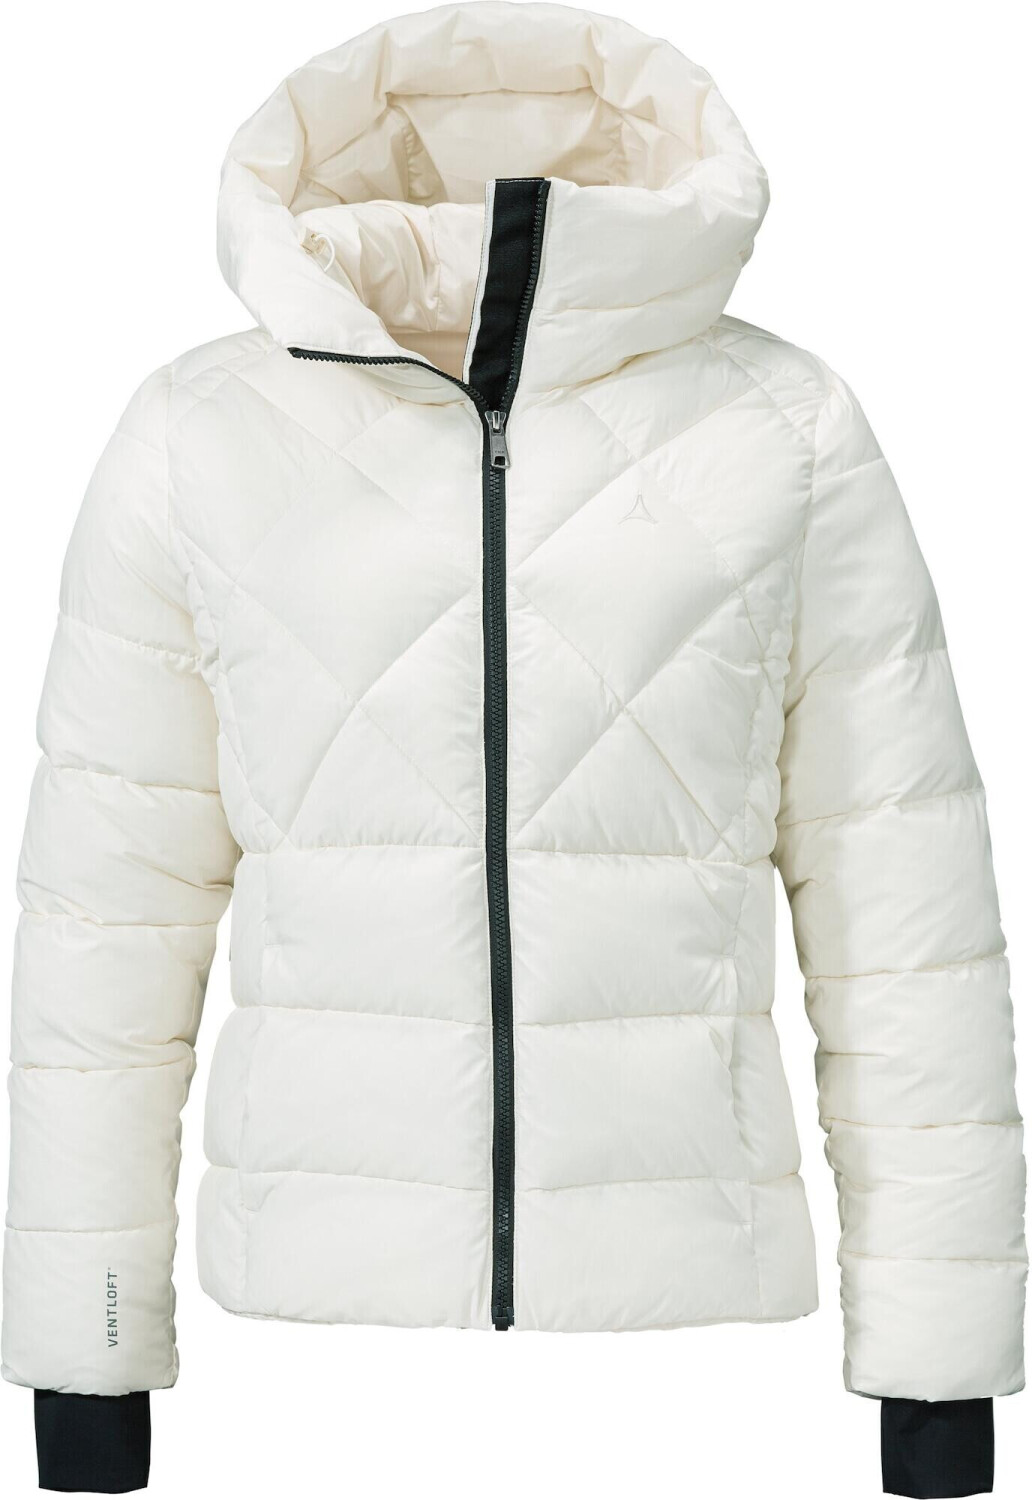 Schöffel Ins Jacket Boston Women (13500-23904) whisper white ab 119,99 € |  Preisvergleich bei